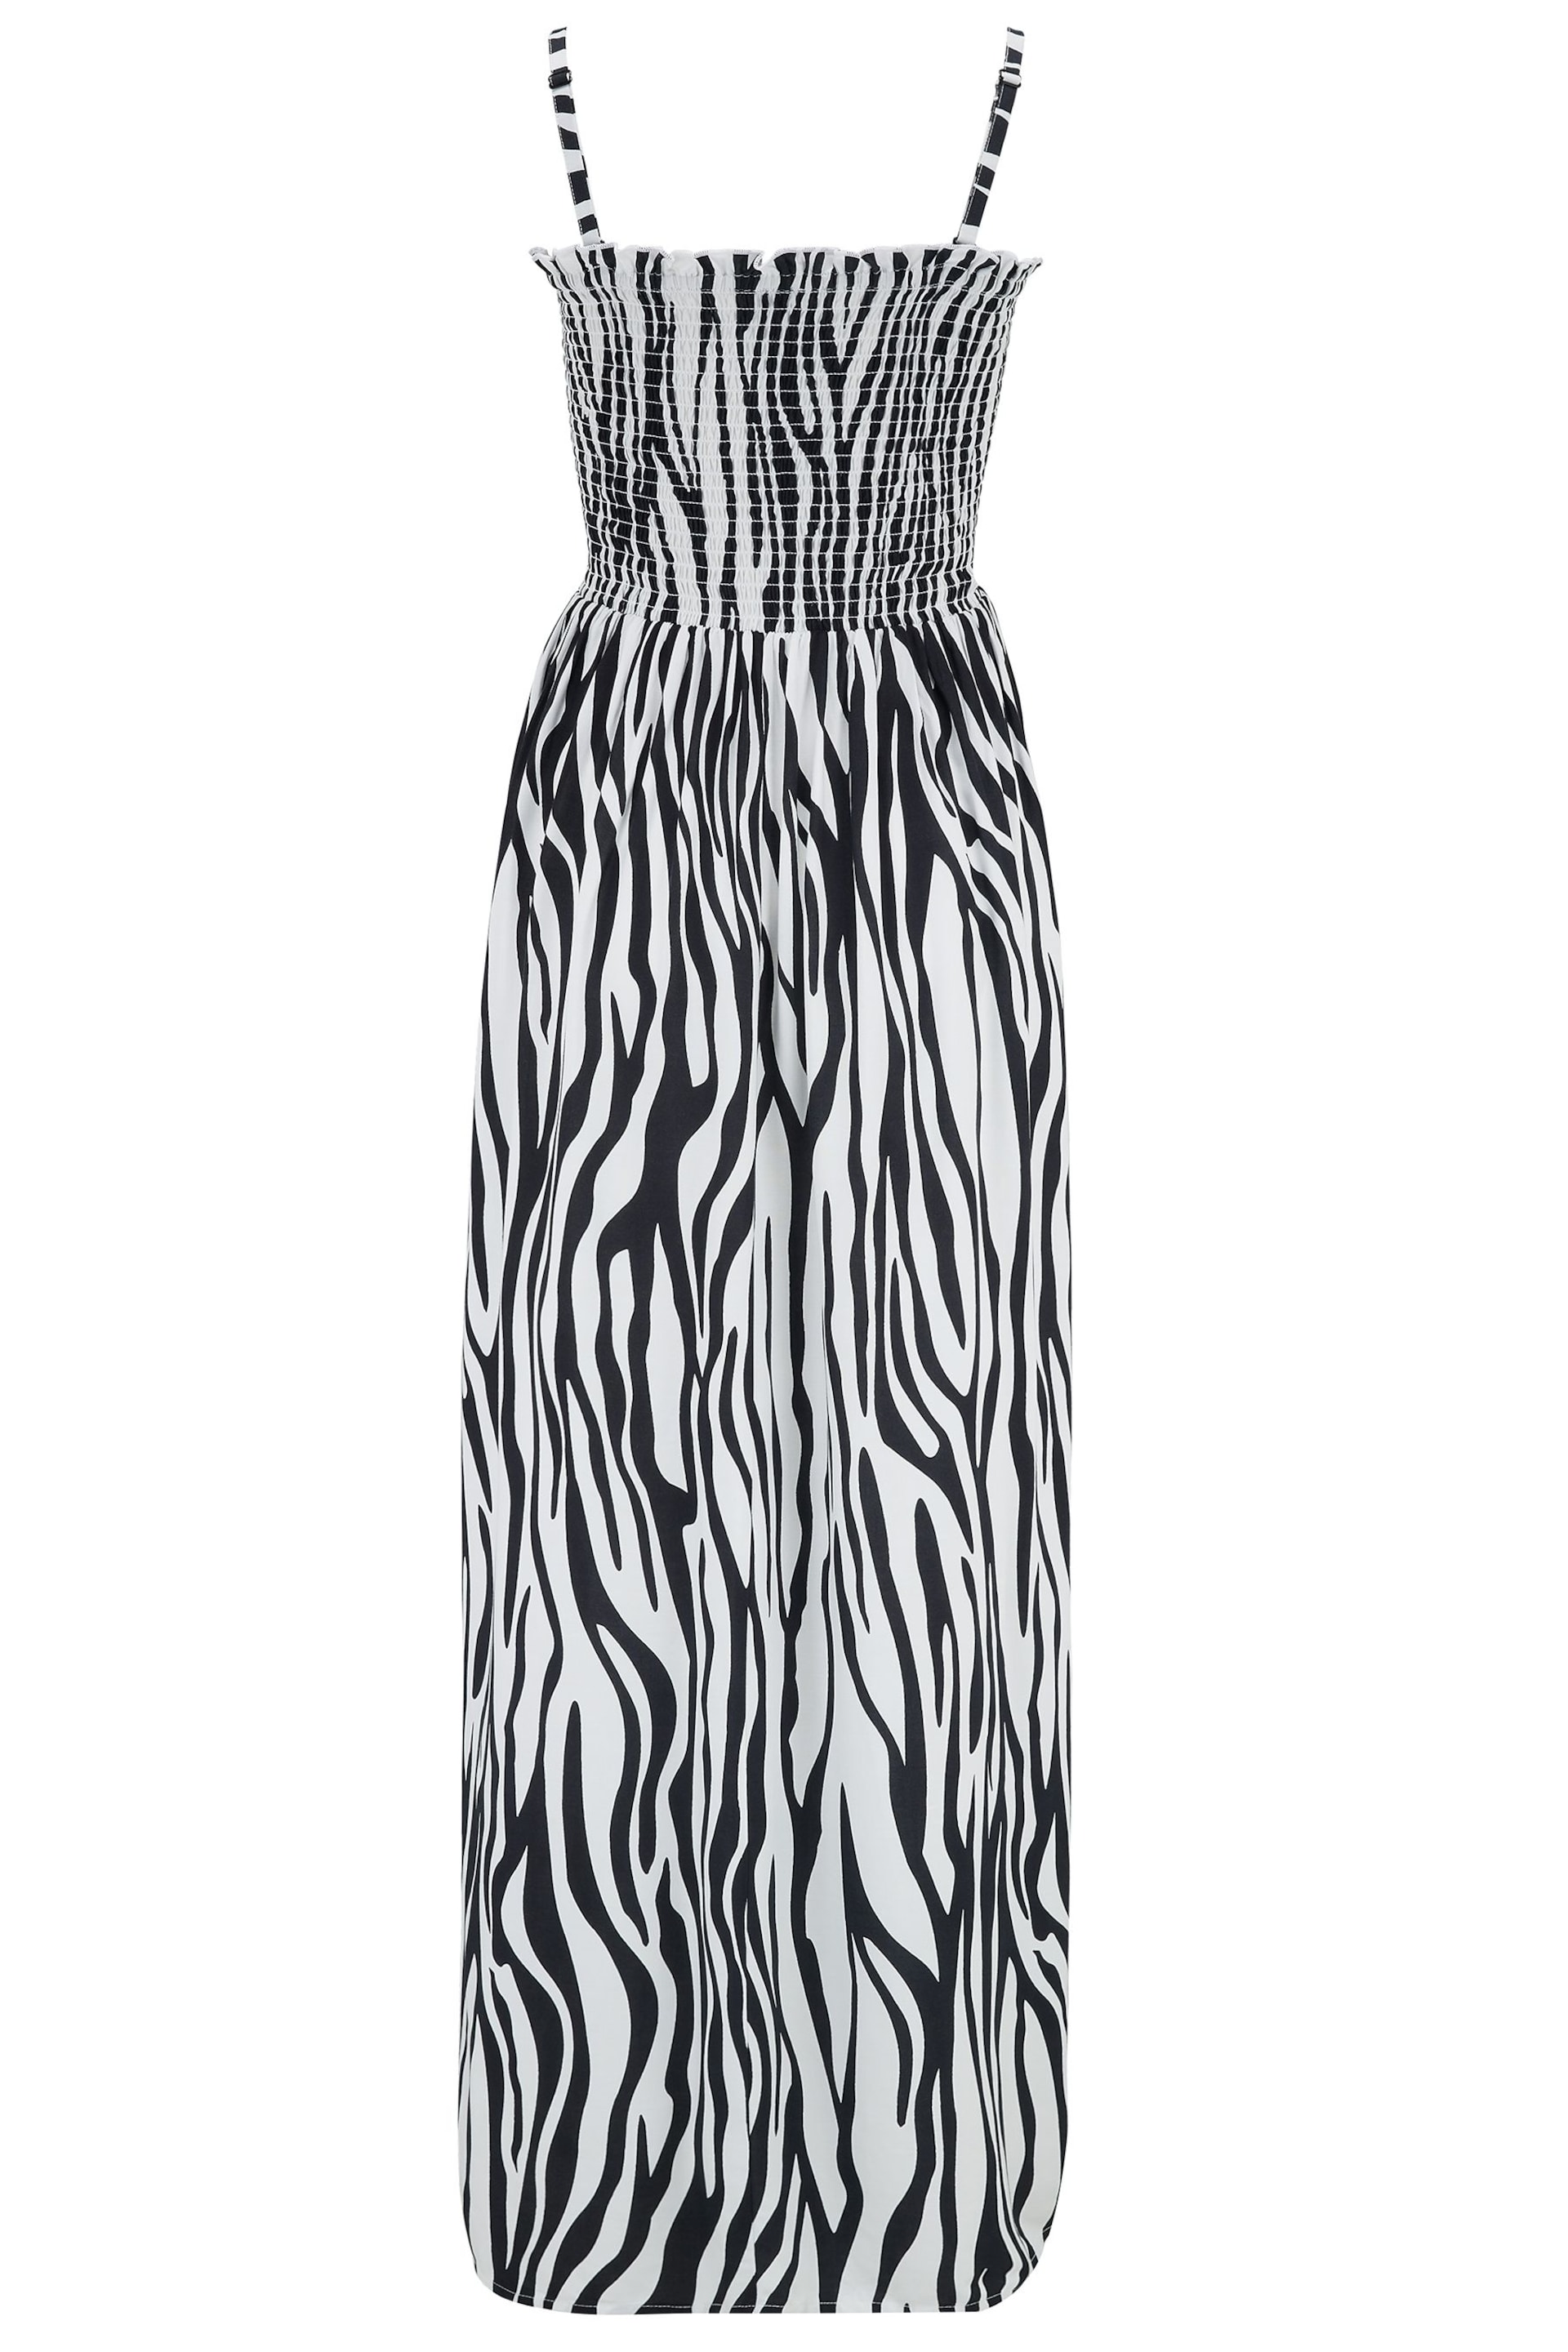 Pour Moi Black/White Removable Strap Dress - Image 5 of 5